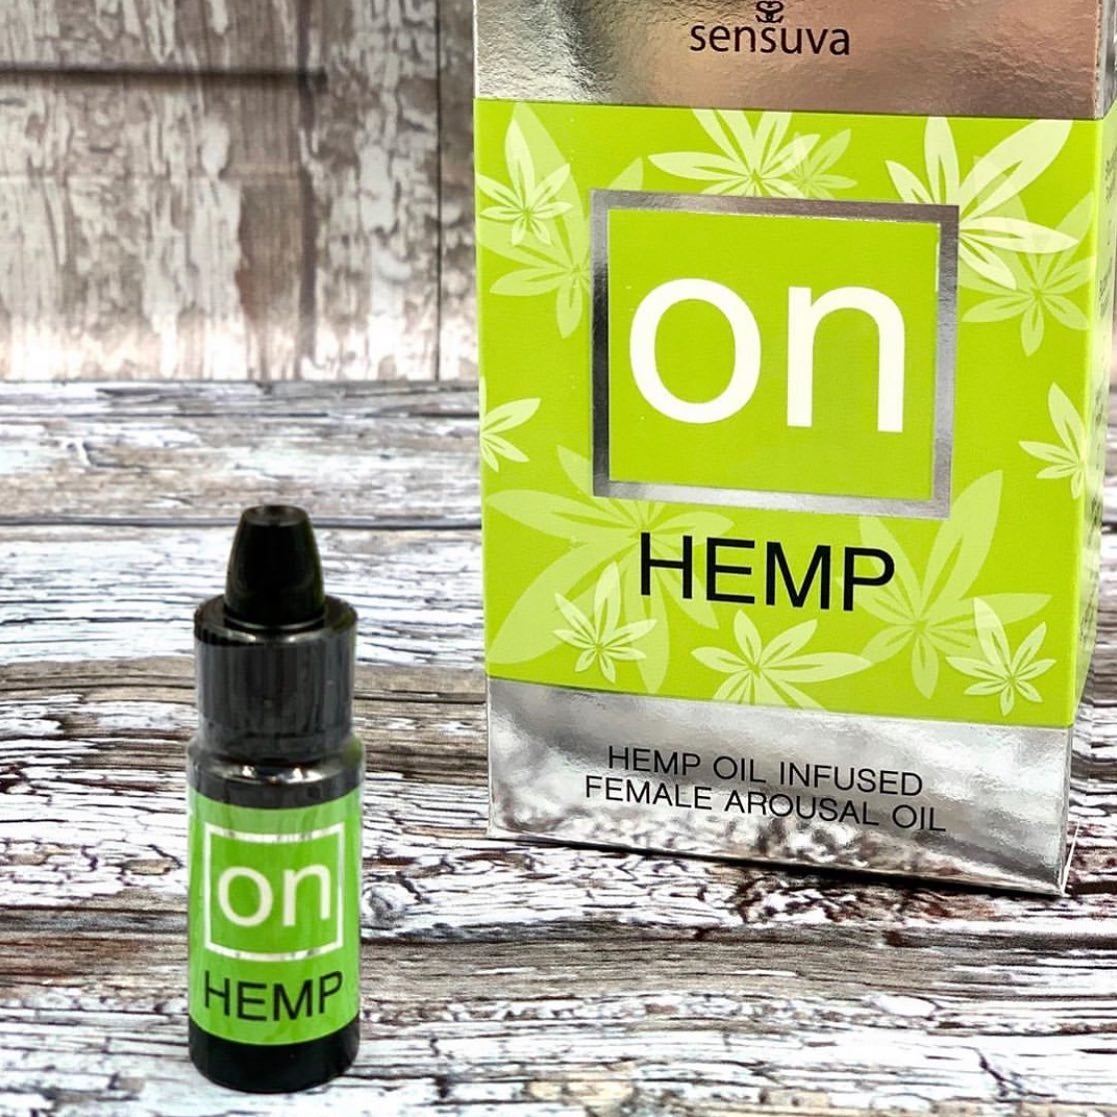 Black and green bottle of Sensuva On hemp oil infused arousal oil